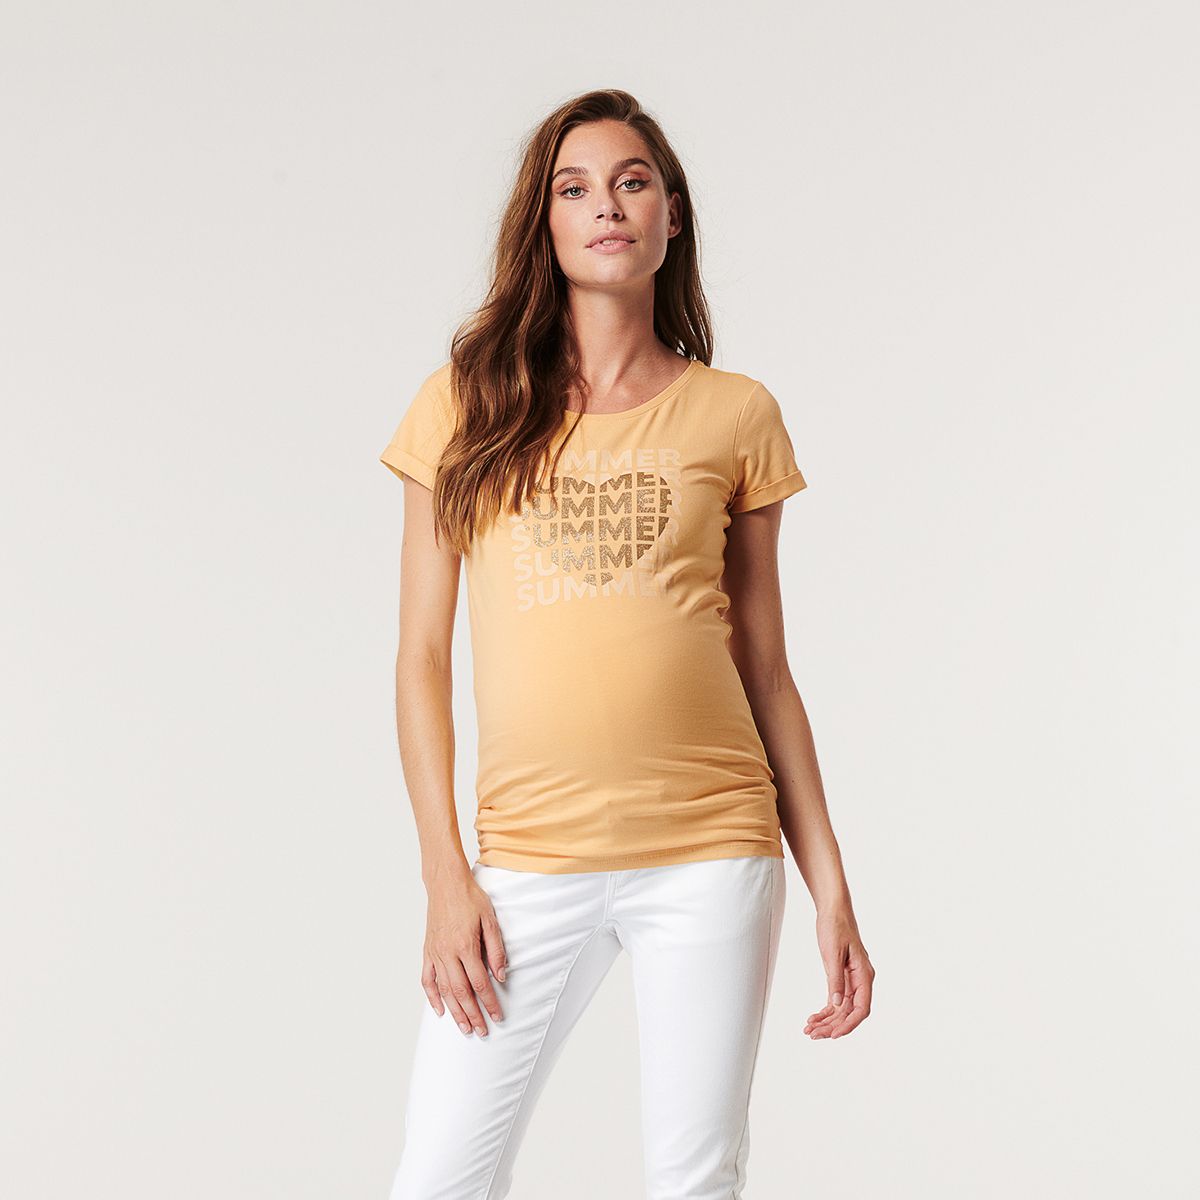 SUPERMOM T-Shirt de Maternité Femme 